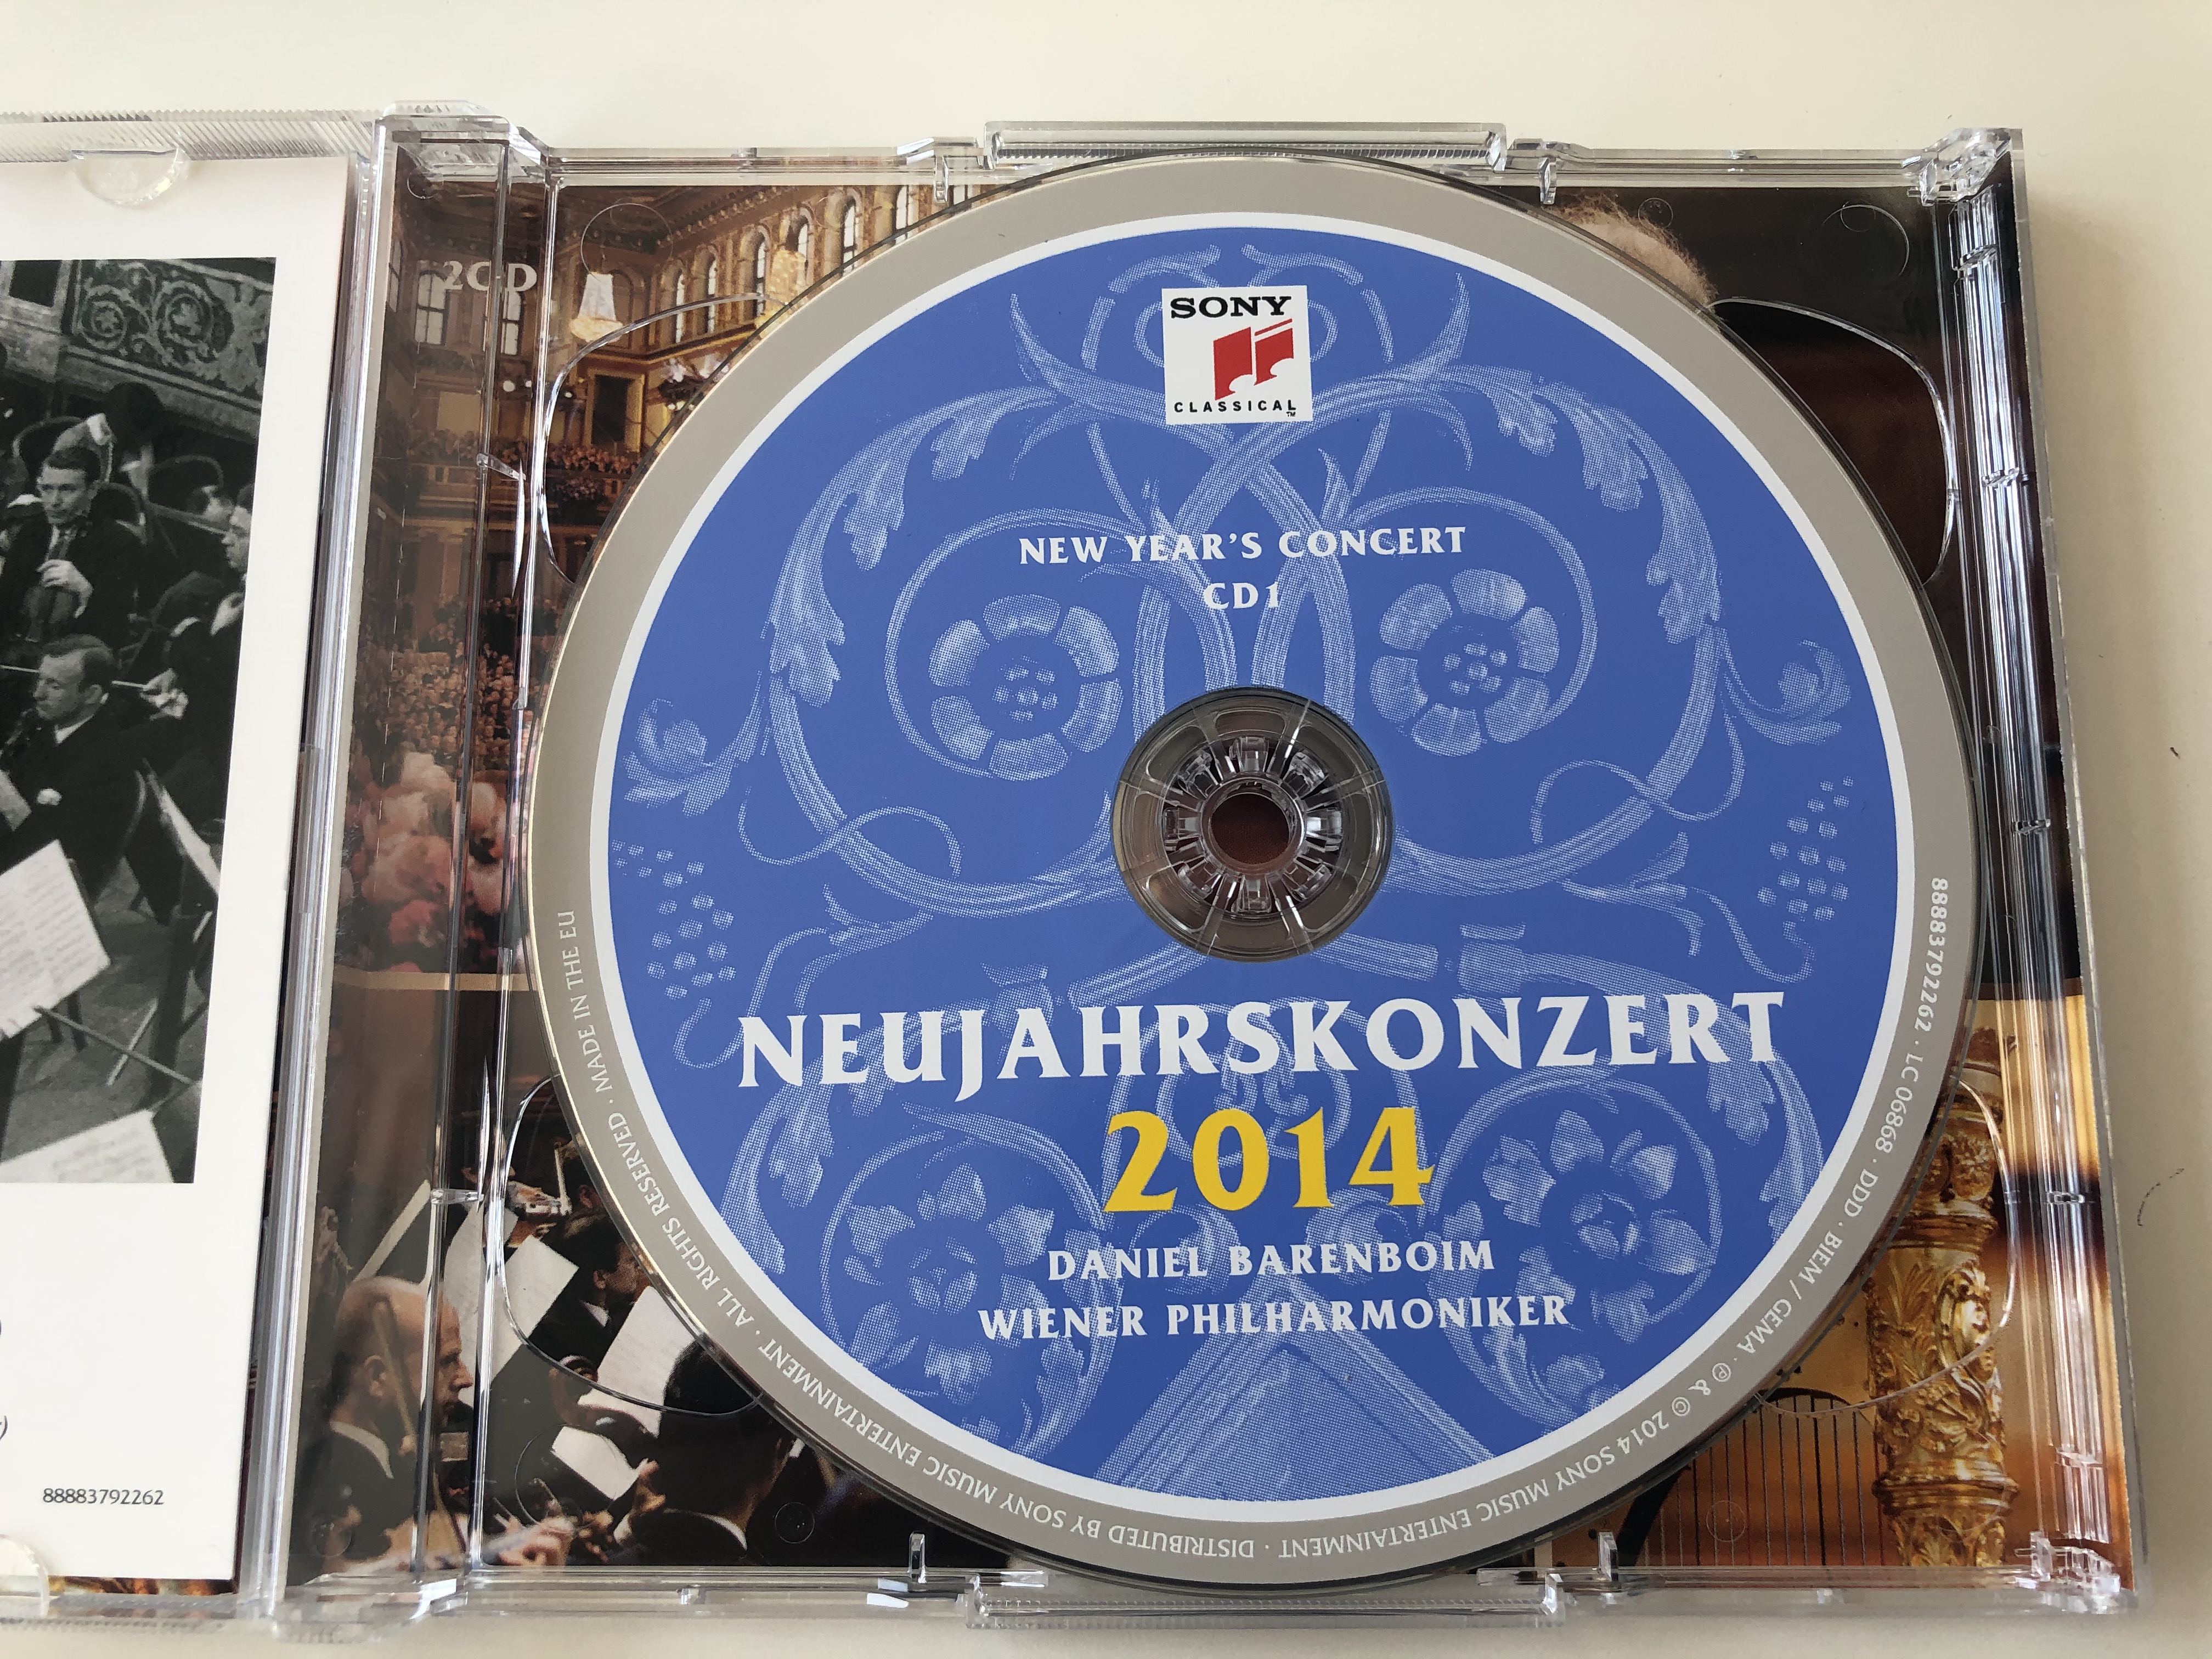 daniel-barenboim-wiener-philharmoniker-neujahrskonzert-new-year-s-concert-2014-sony-classical-2x-audio-cd-2014-88883792262-6-.jpg